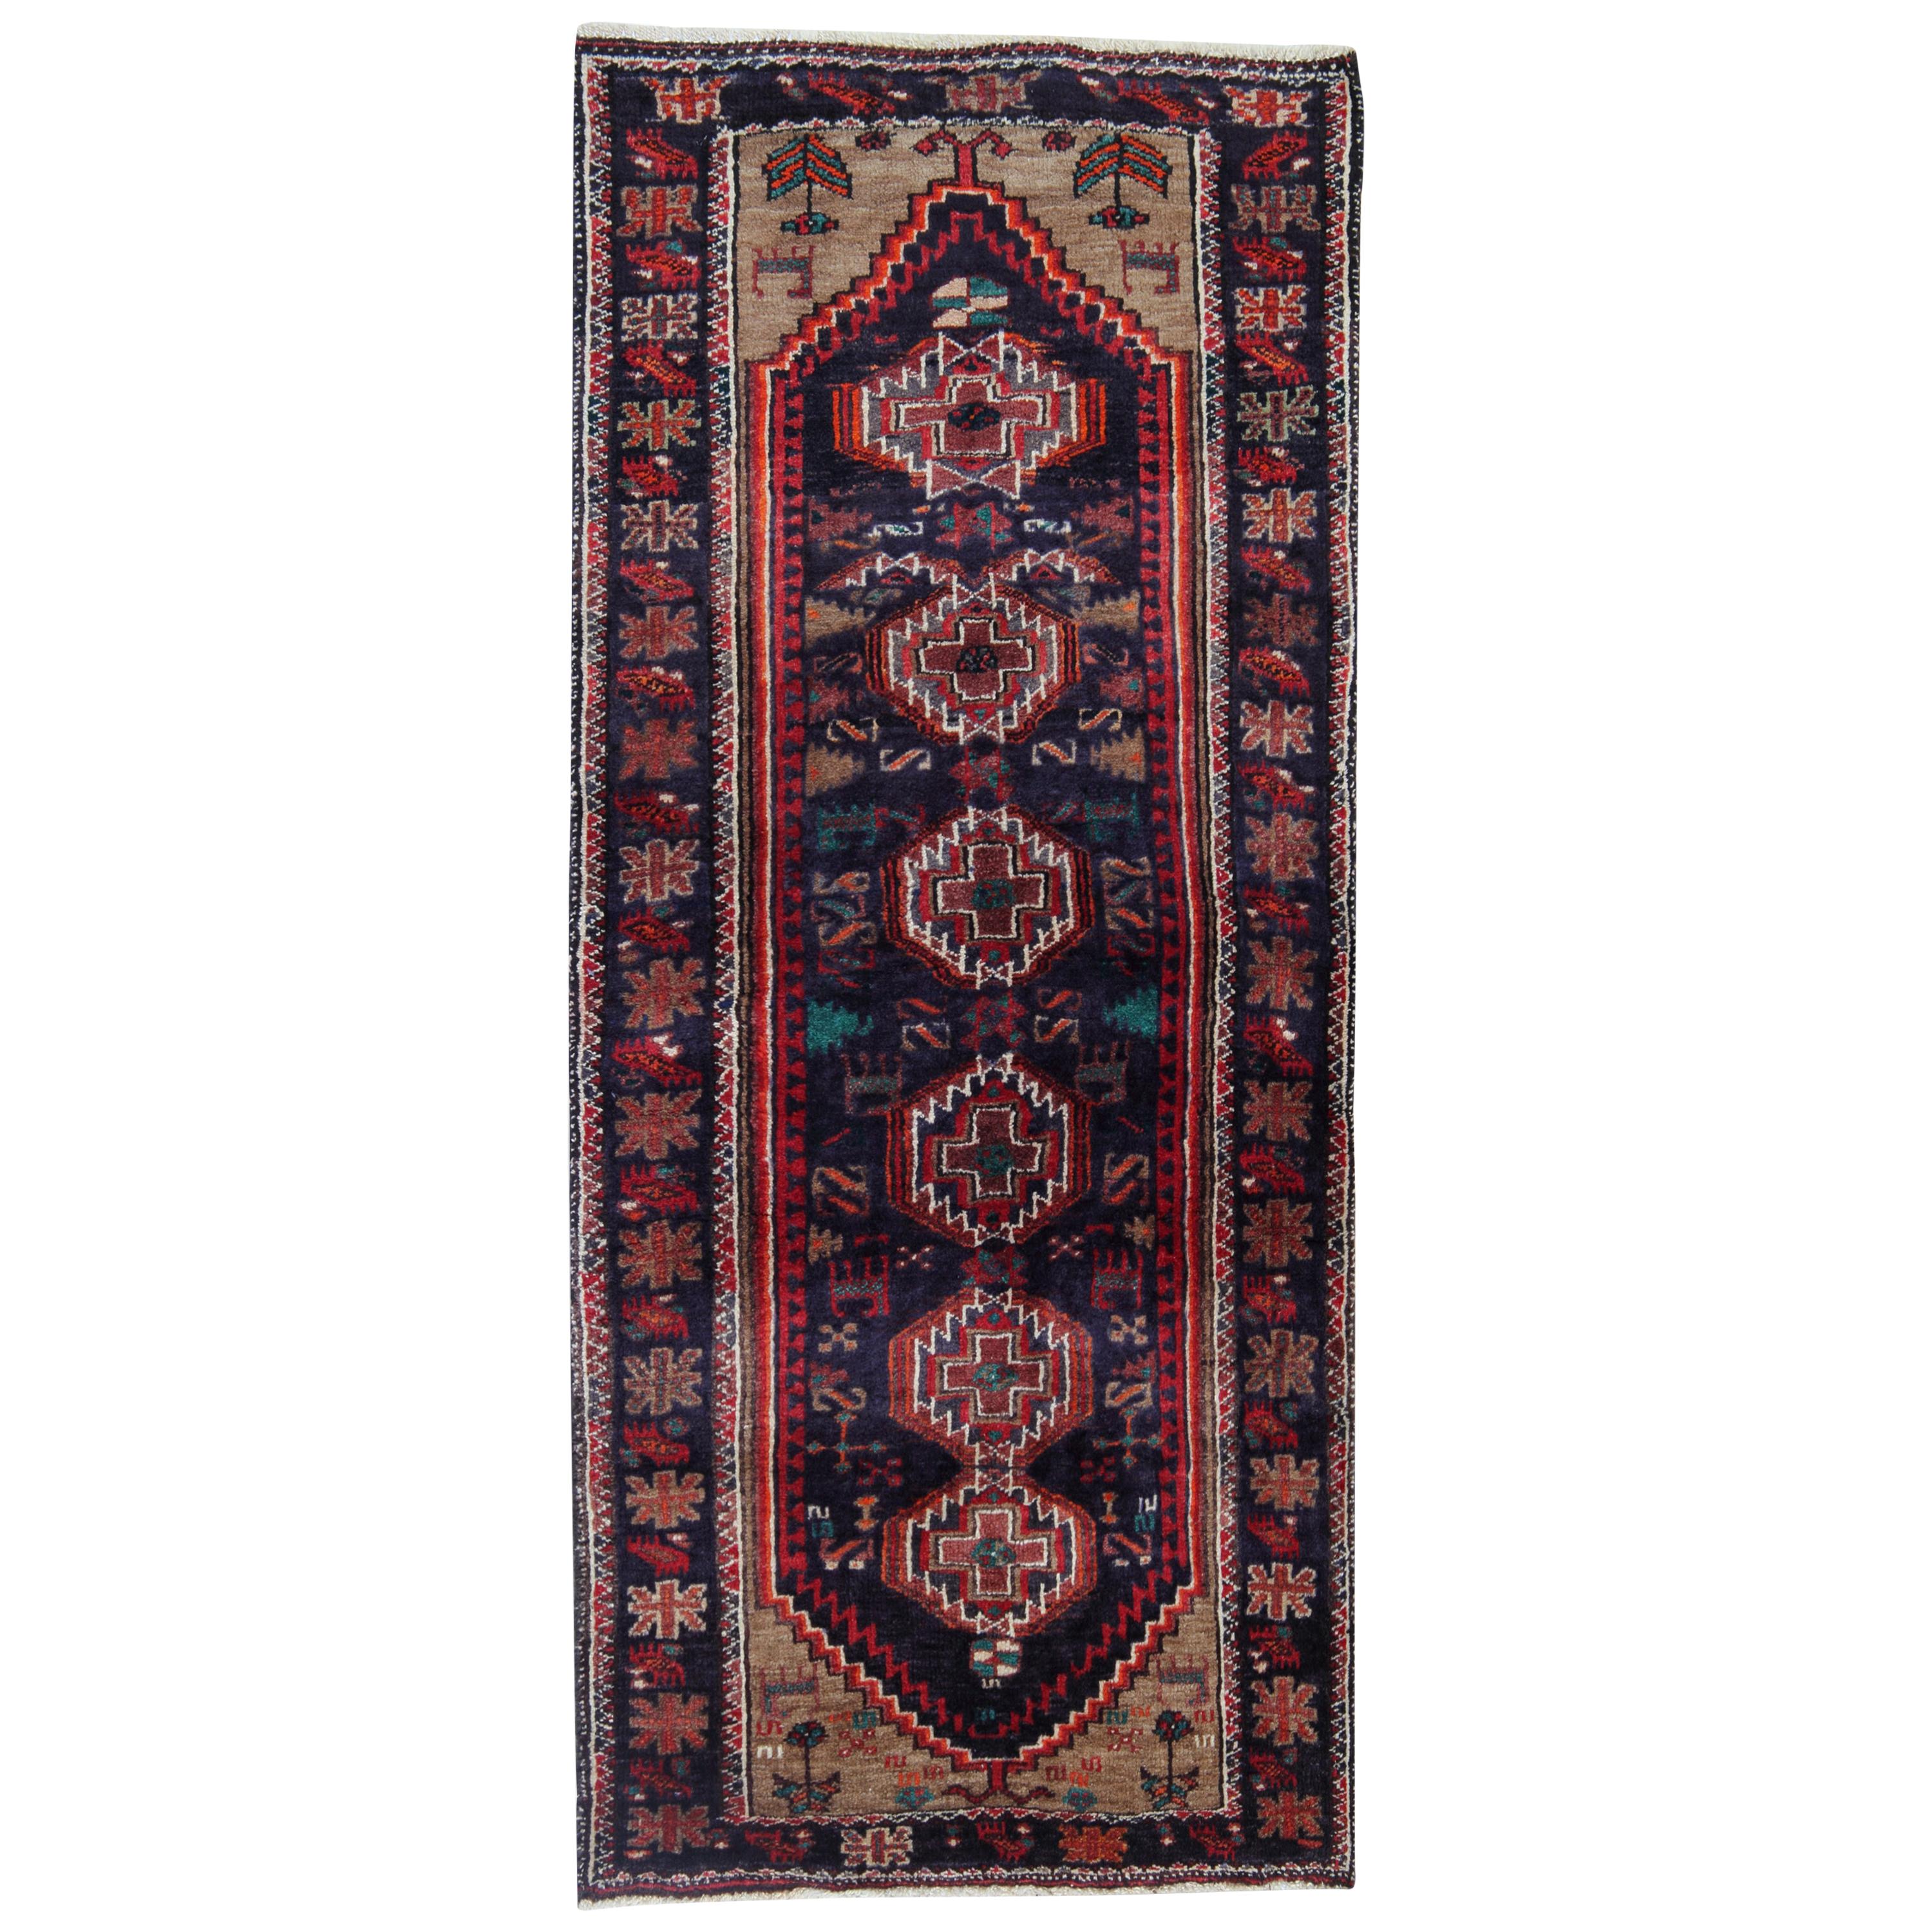 Small Handmade Runner Rug Traditional Long Vintage Carpet